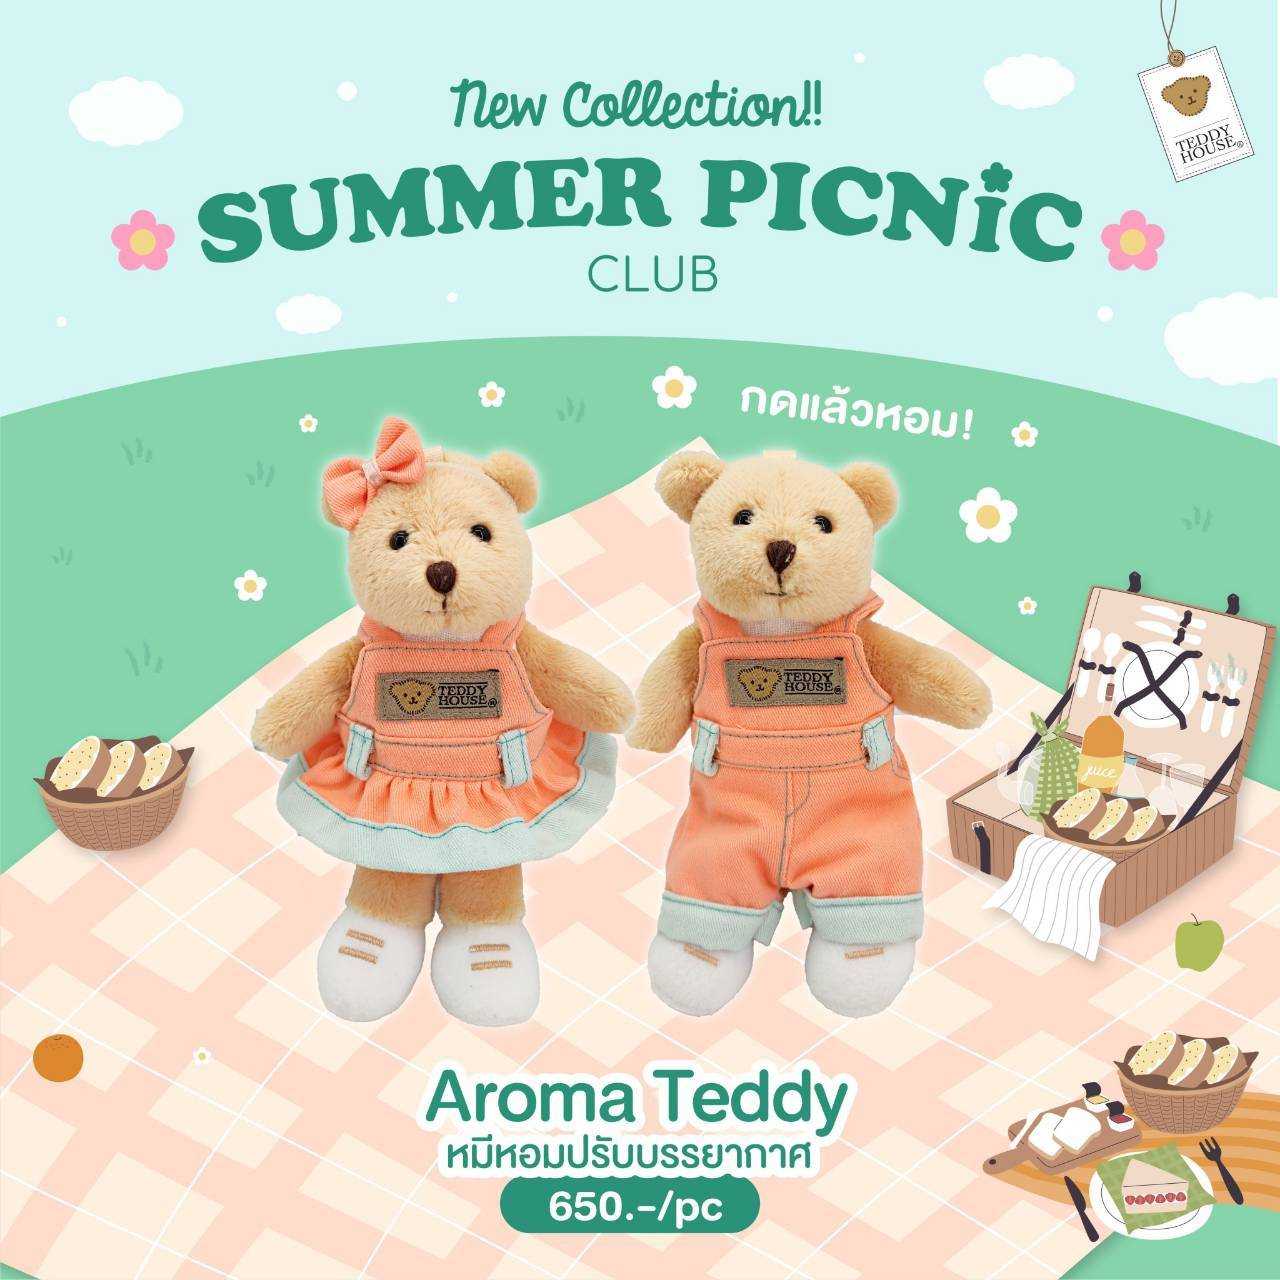 Teddy House : Aroma Teddy ตุ๊กตาหมีหอมปรับอากาศ New Summer Picnic Club Collection